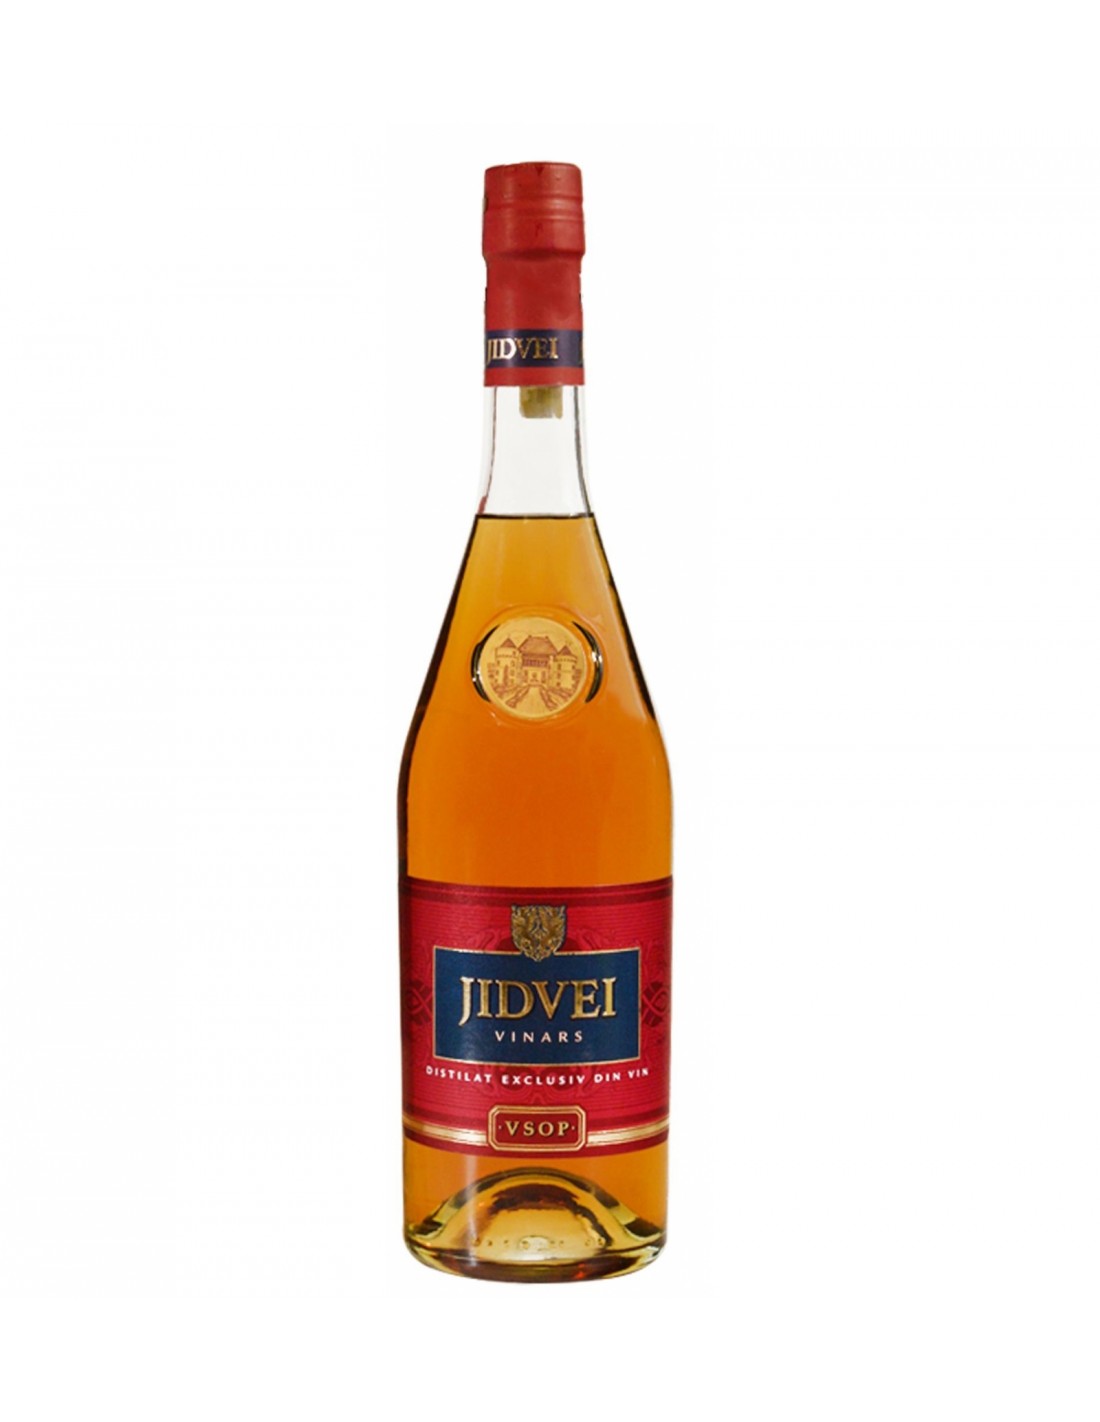 Brandy Jidvei Vinars Tarnave VSOP 42% alc., 0.7L, Romania alcooldiscount.ro